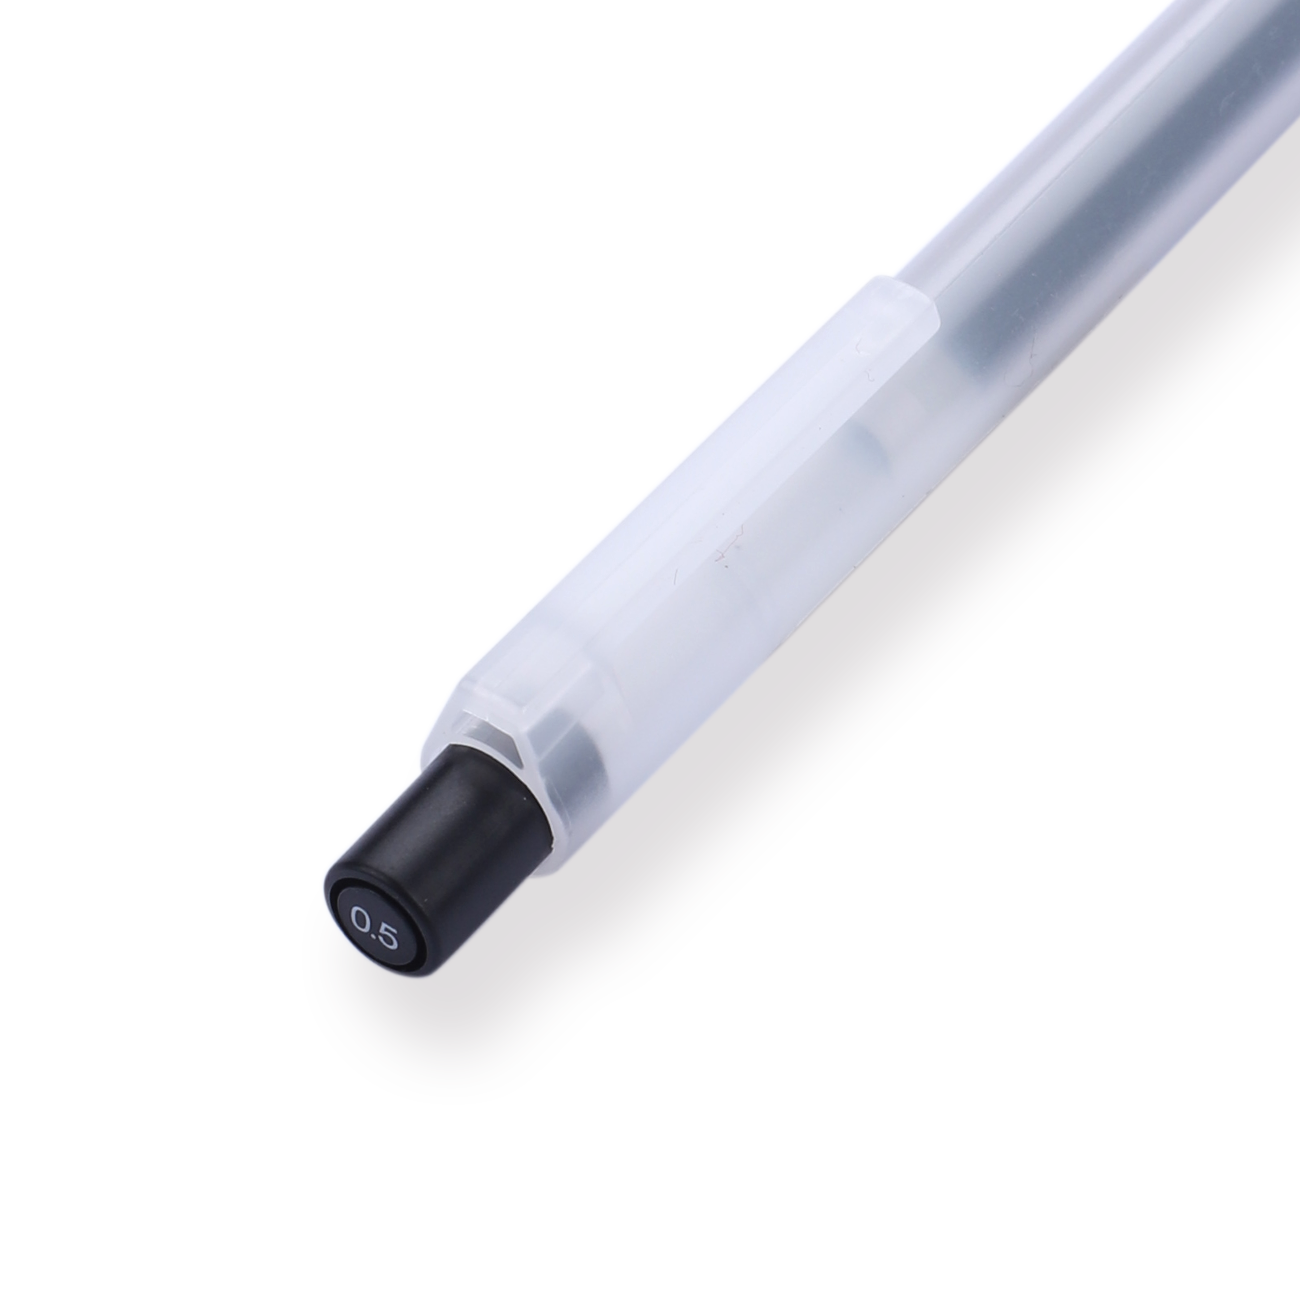 MUJI Gel Ink Cap Type Pen 0.5mm